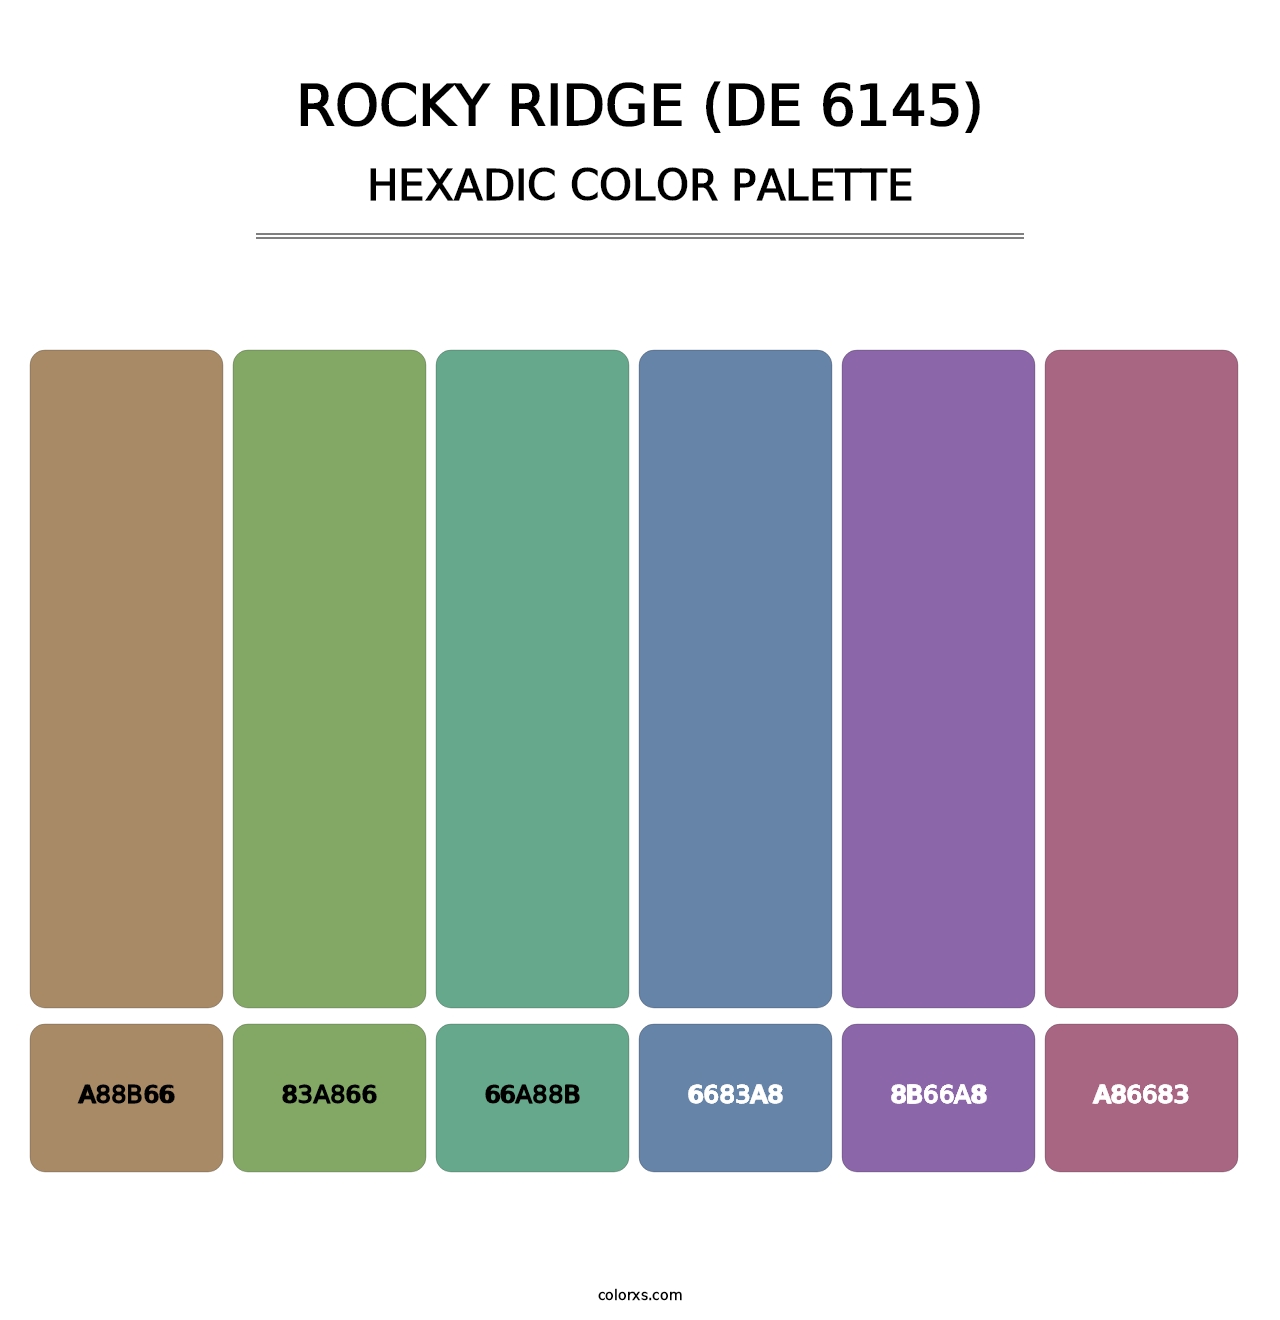 Rocky Ridge (DE 6145) - Hexadic Color Palette